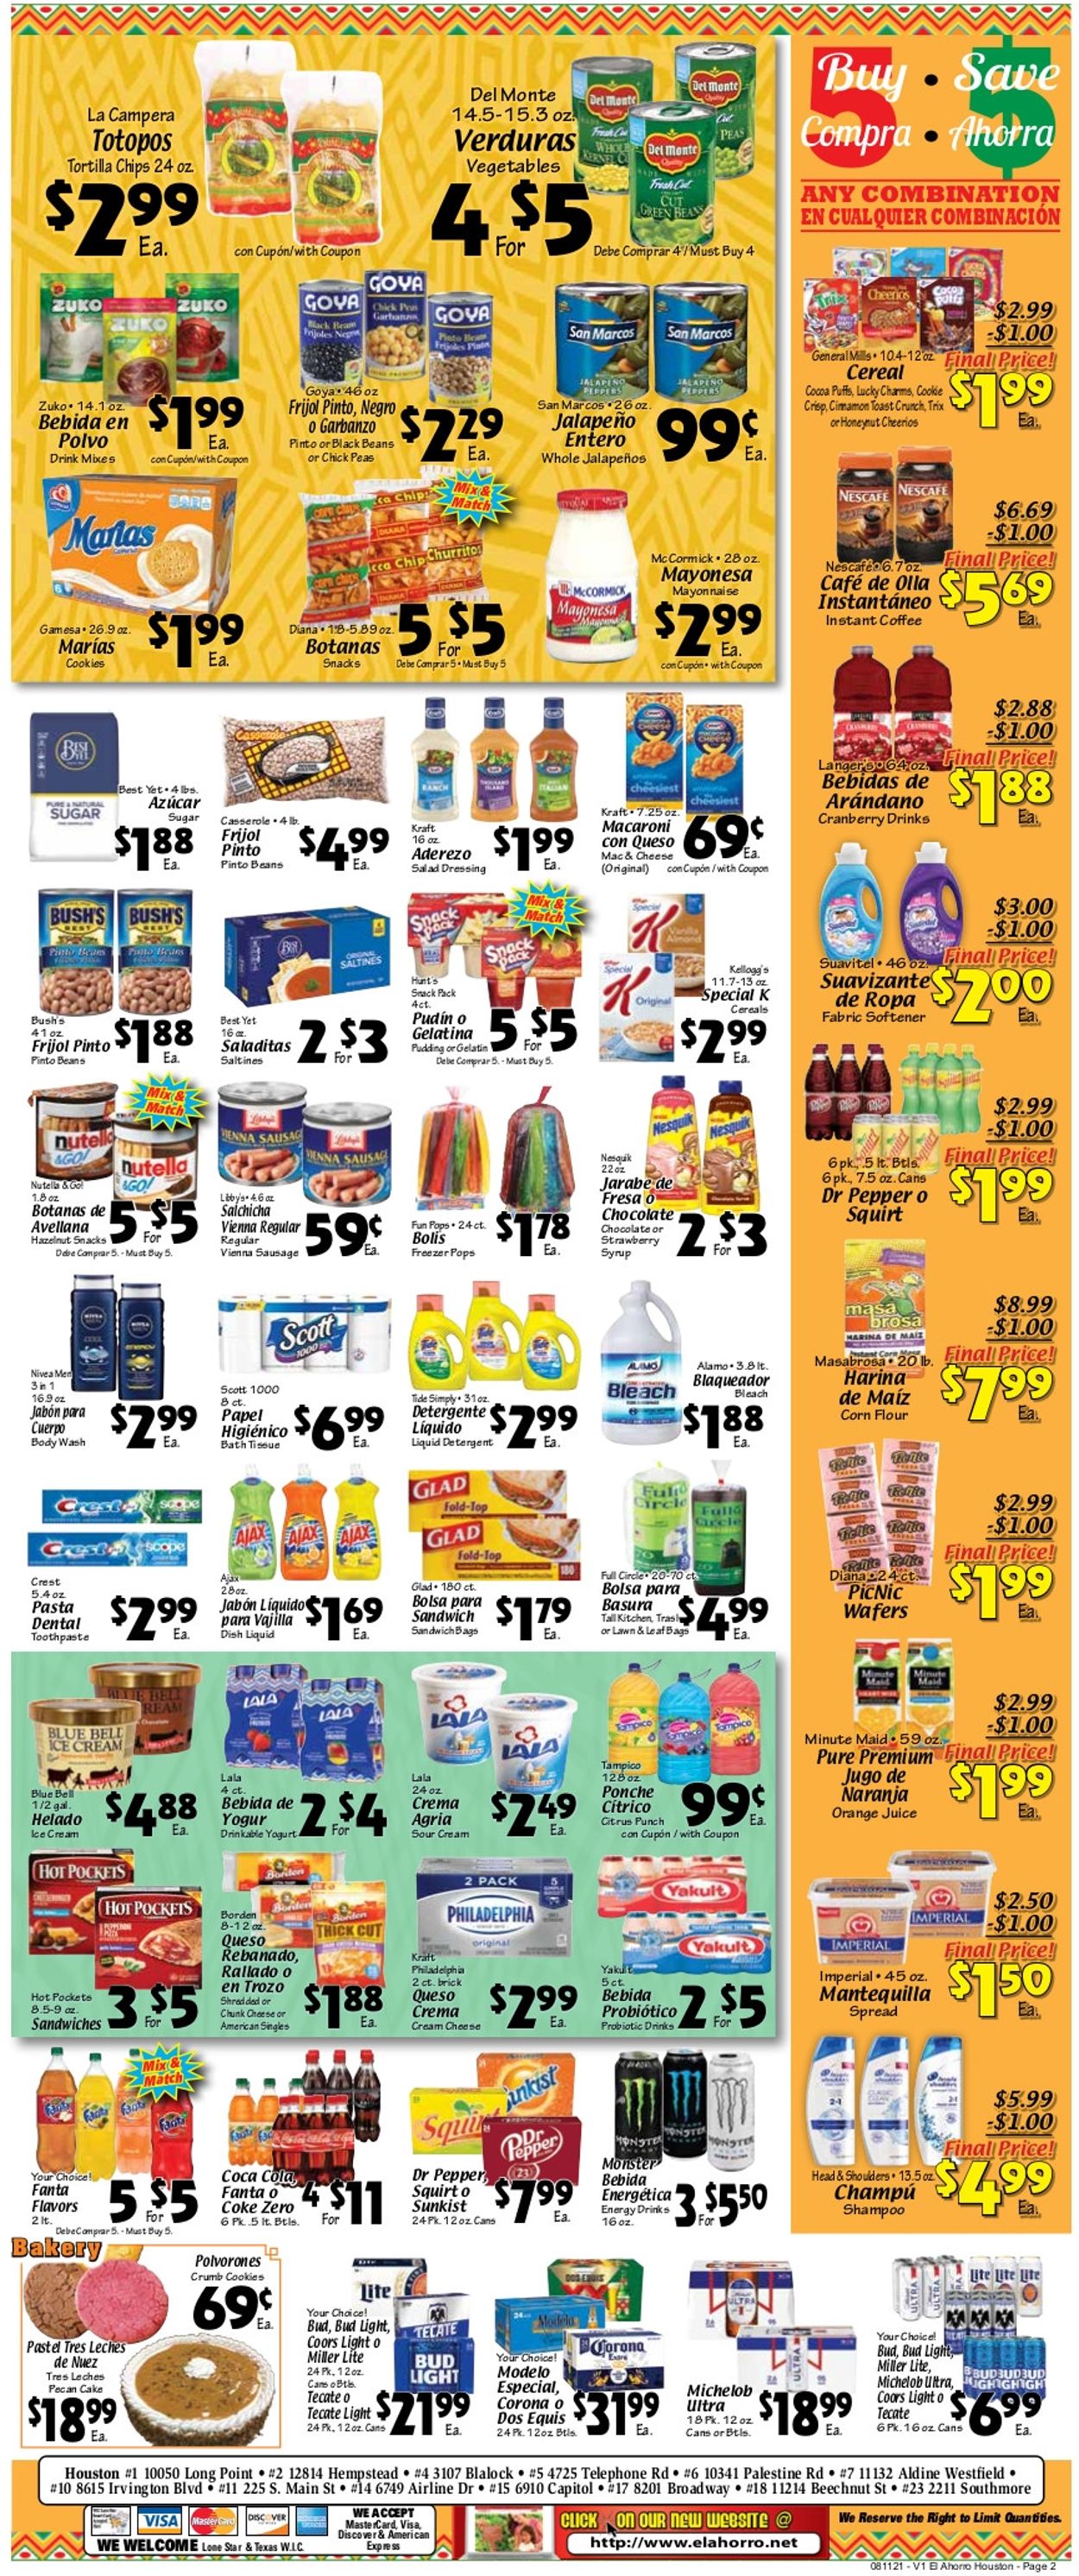 Catalogue El Ahorro Supermarket from 08/11/2021